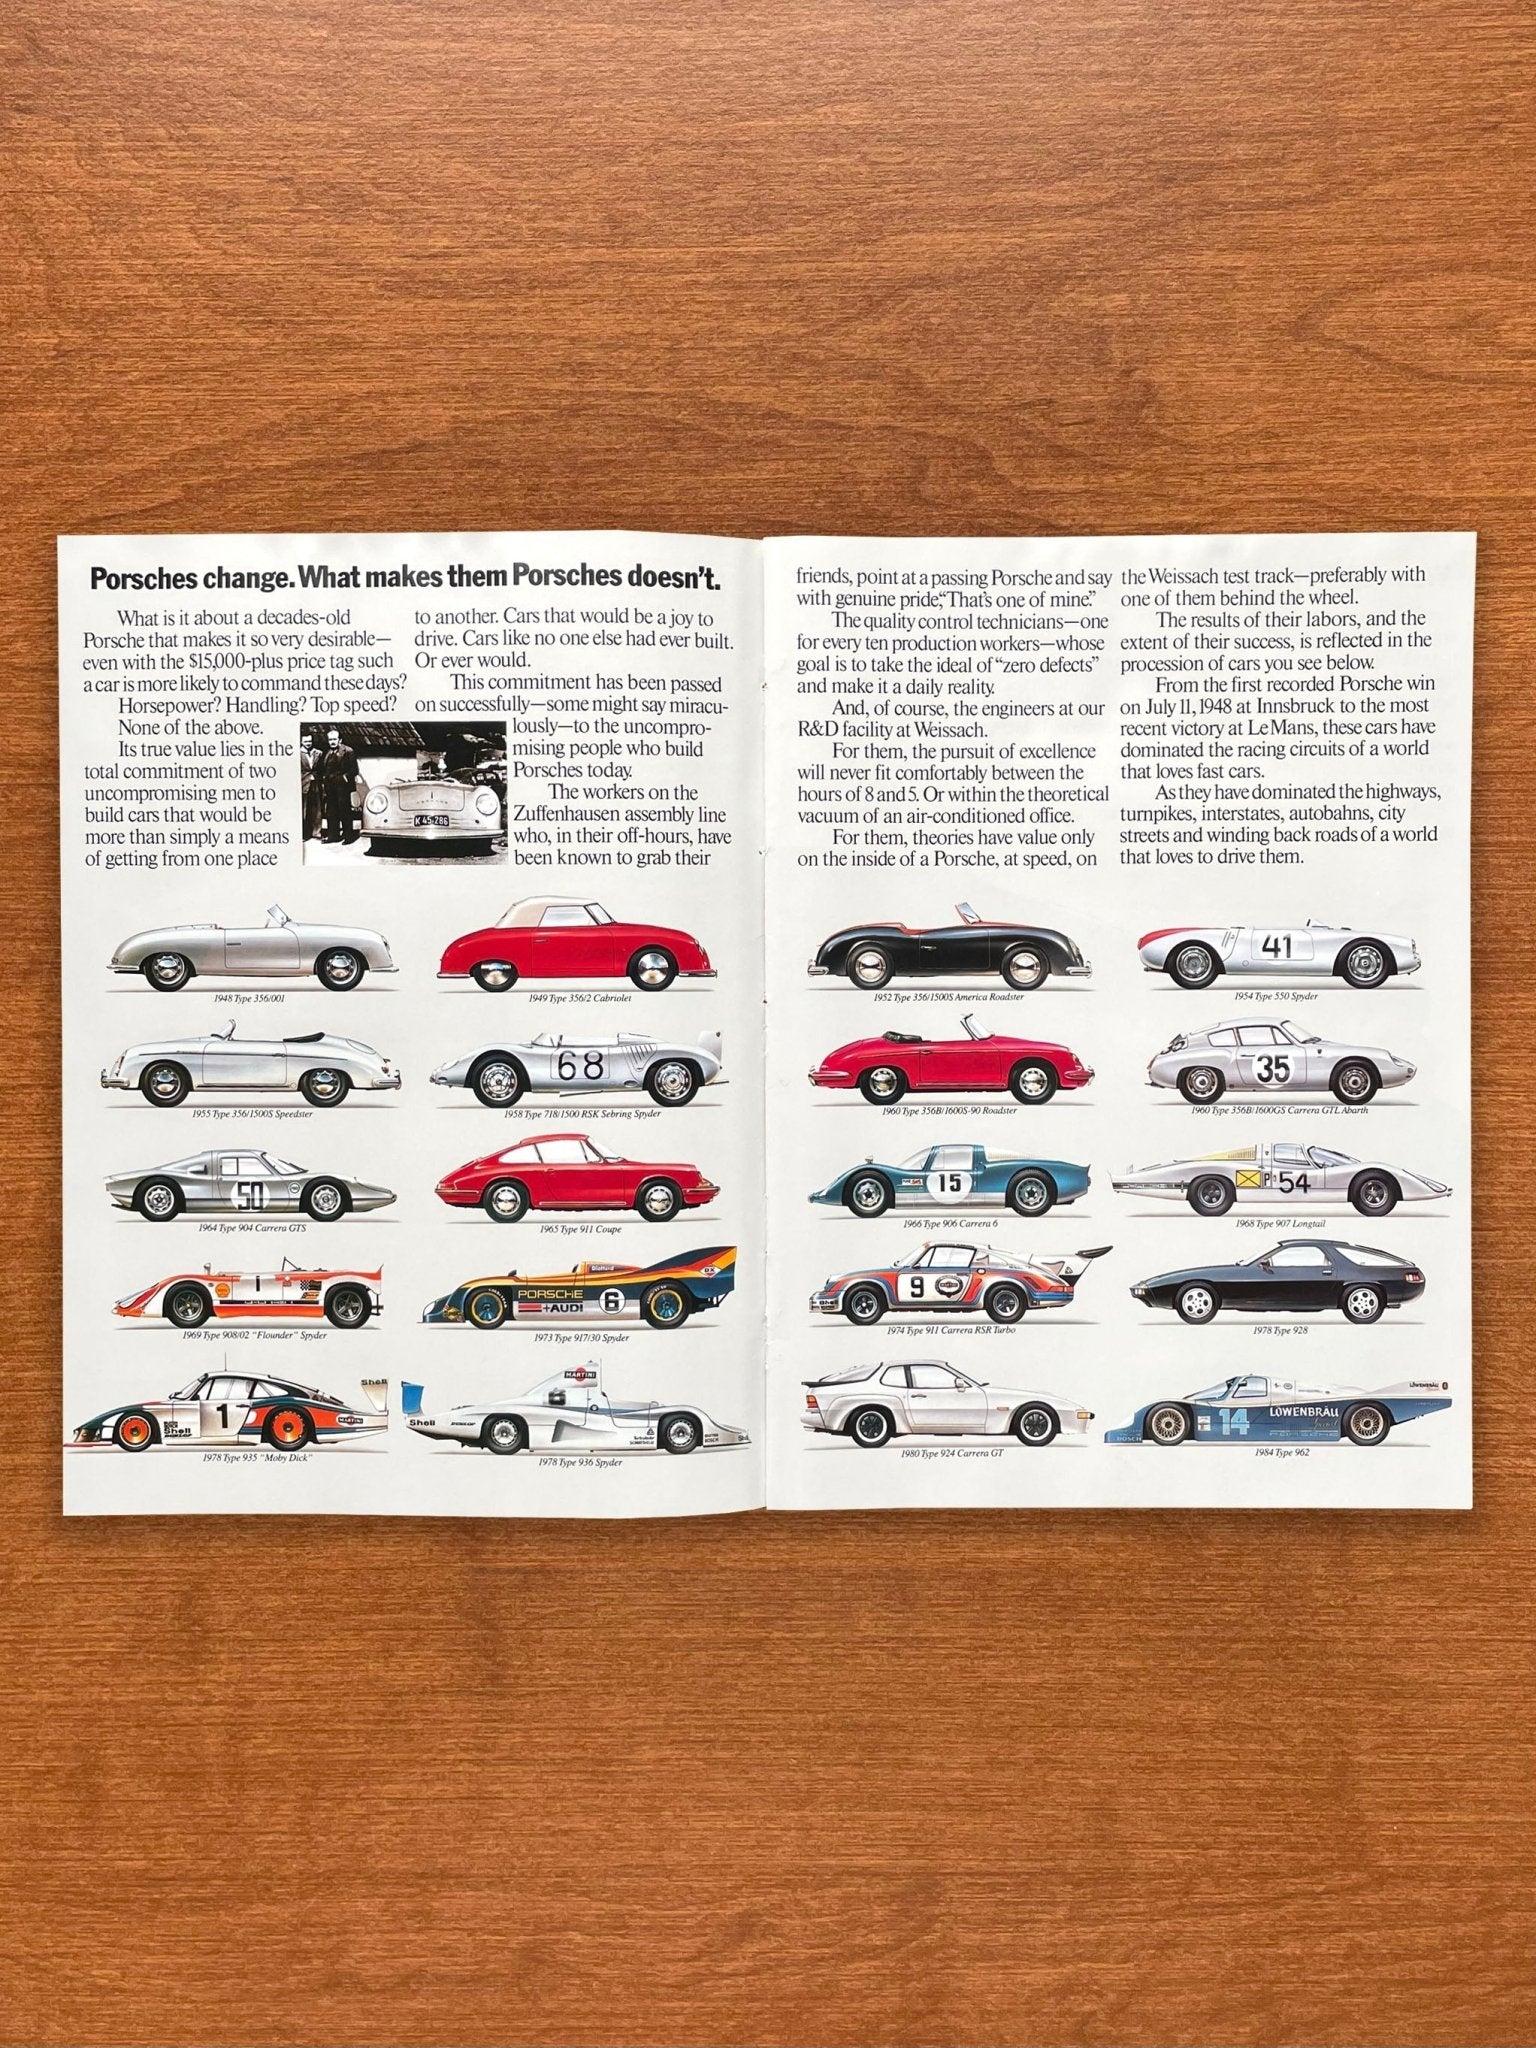 1986 "Porsches change. What makes them Porsches doesn't." Advertisement